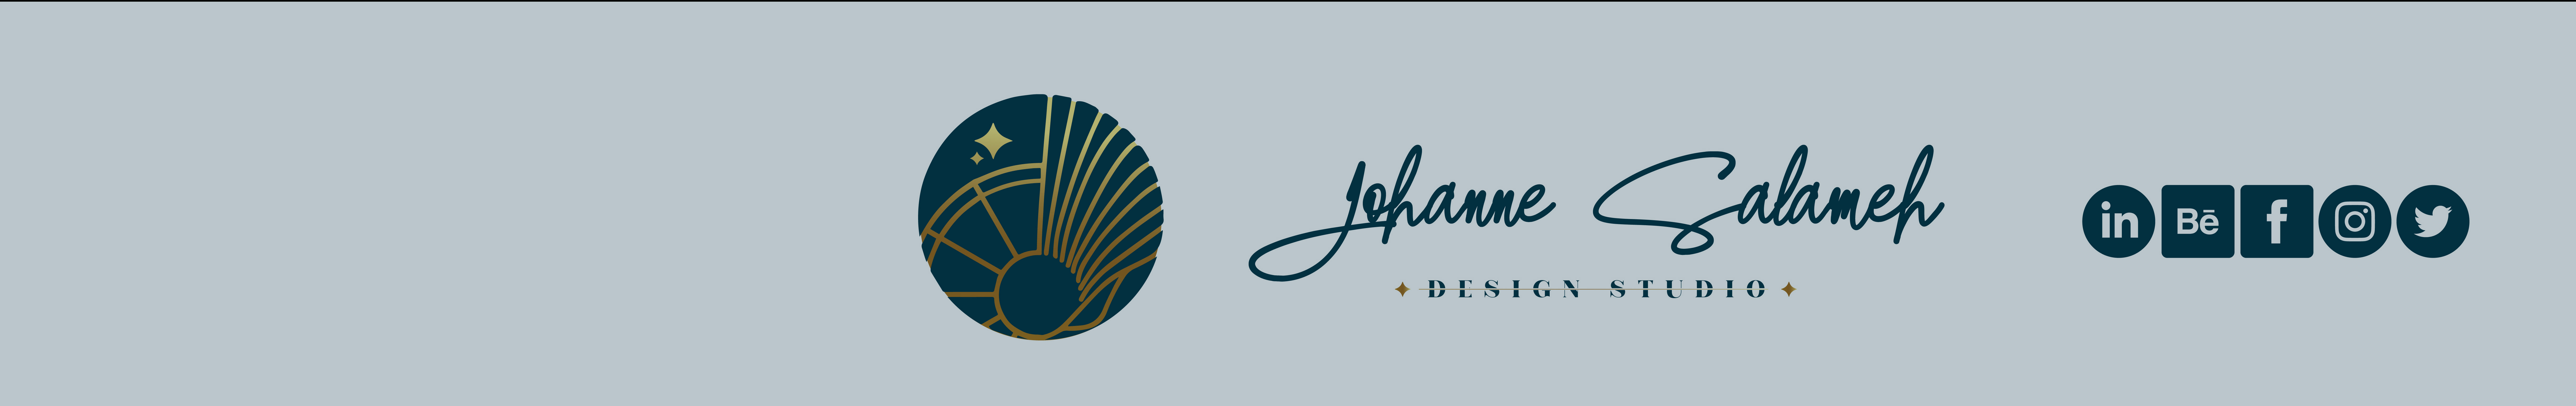 Johanne Salameh's profile banner